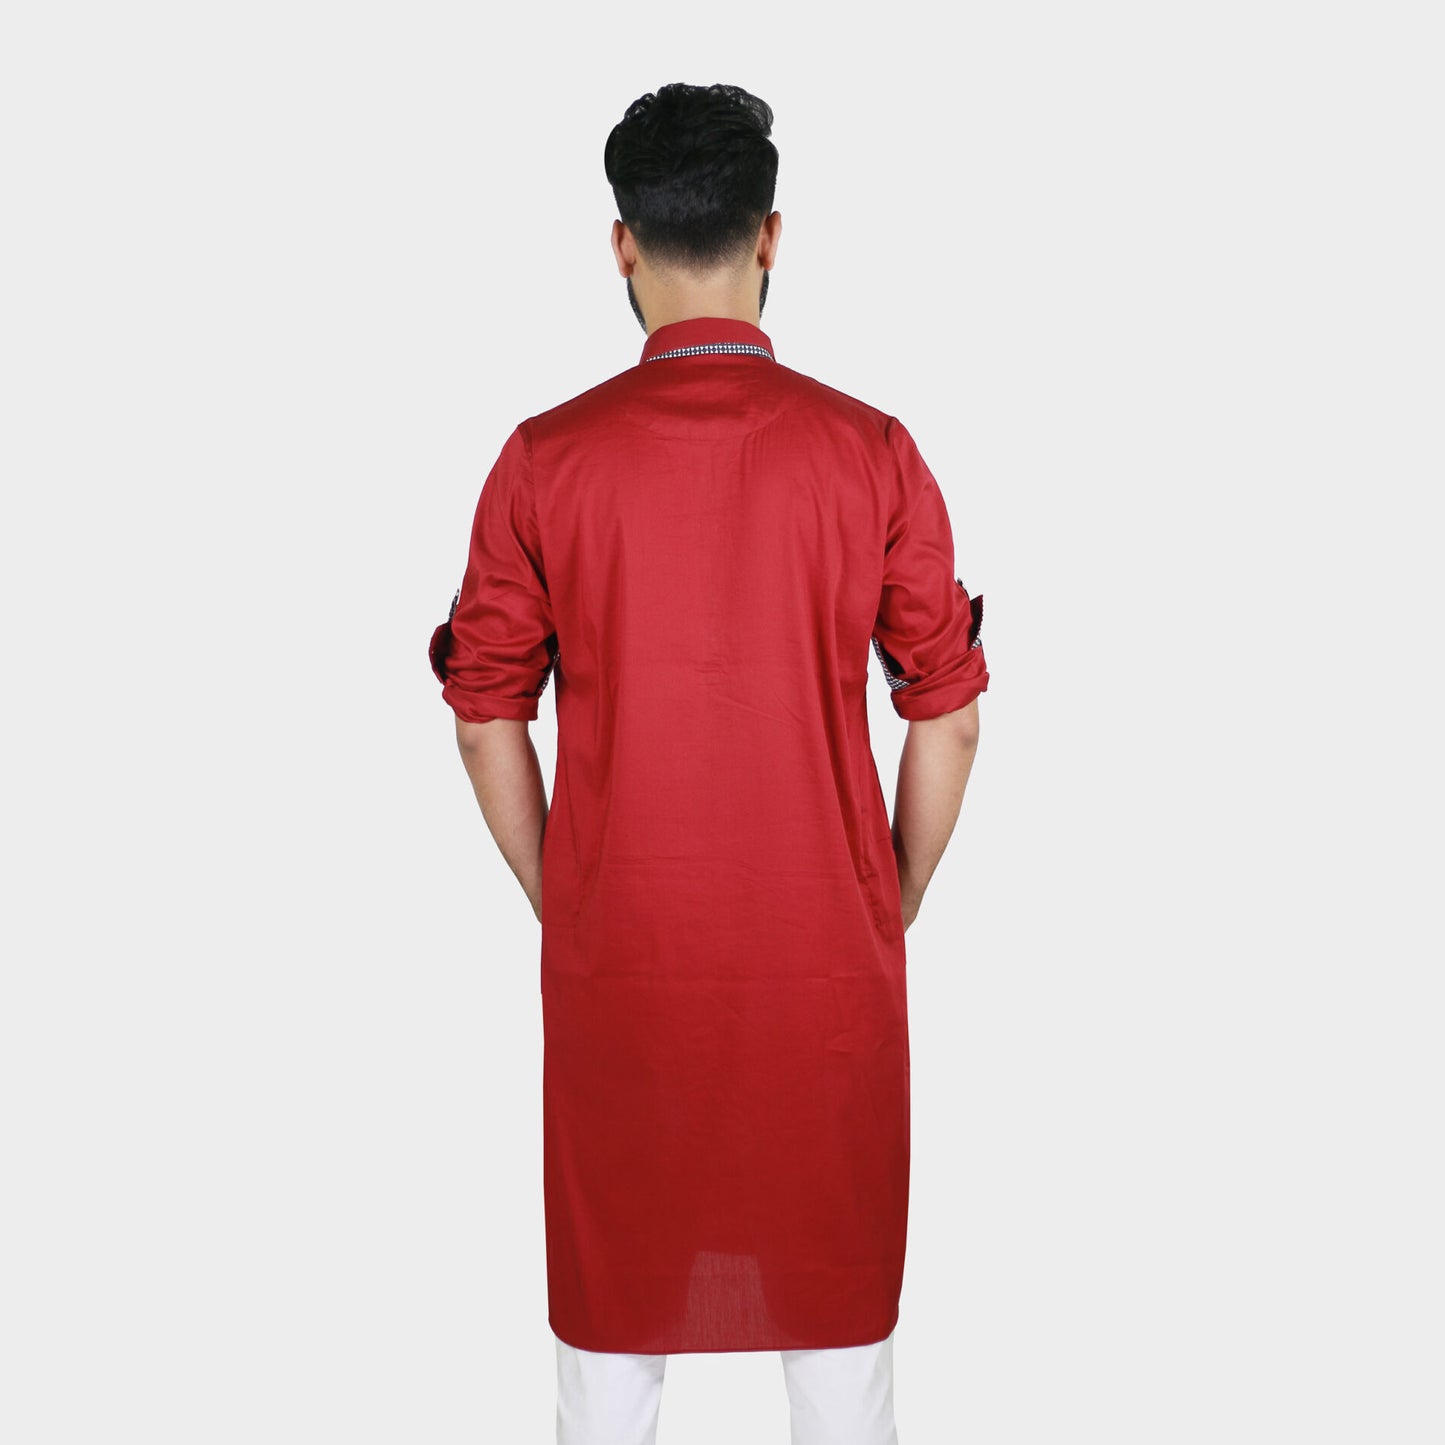 LeeWear's kurta: Stylish Kabli Punjabi Designs for Men PN21124